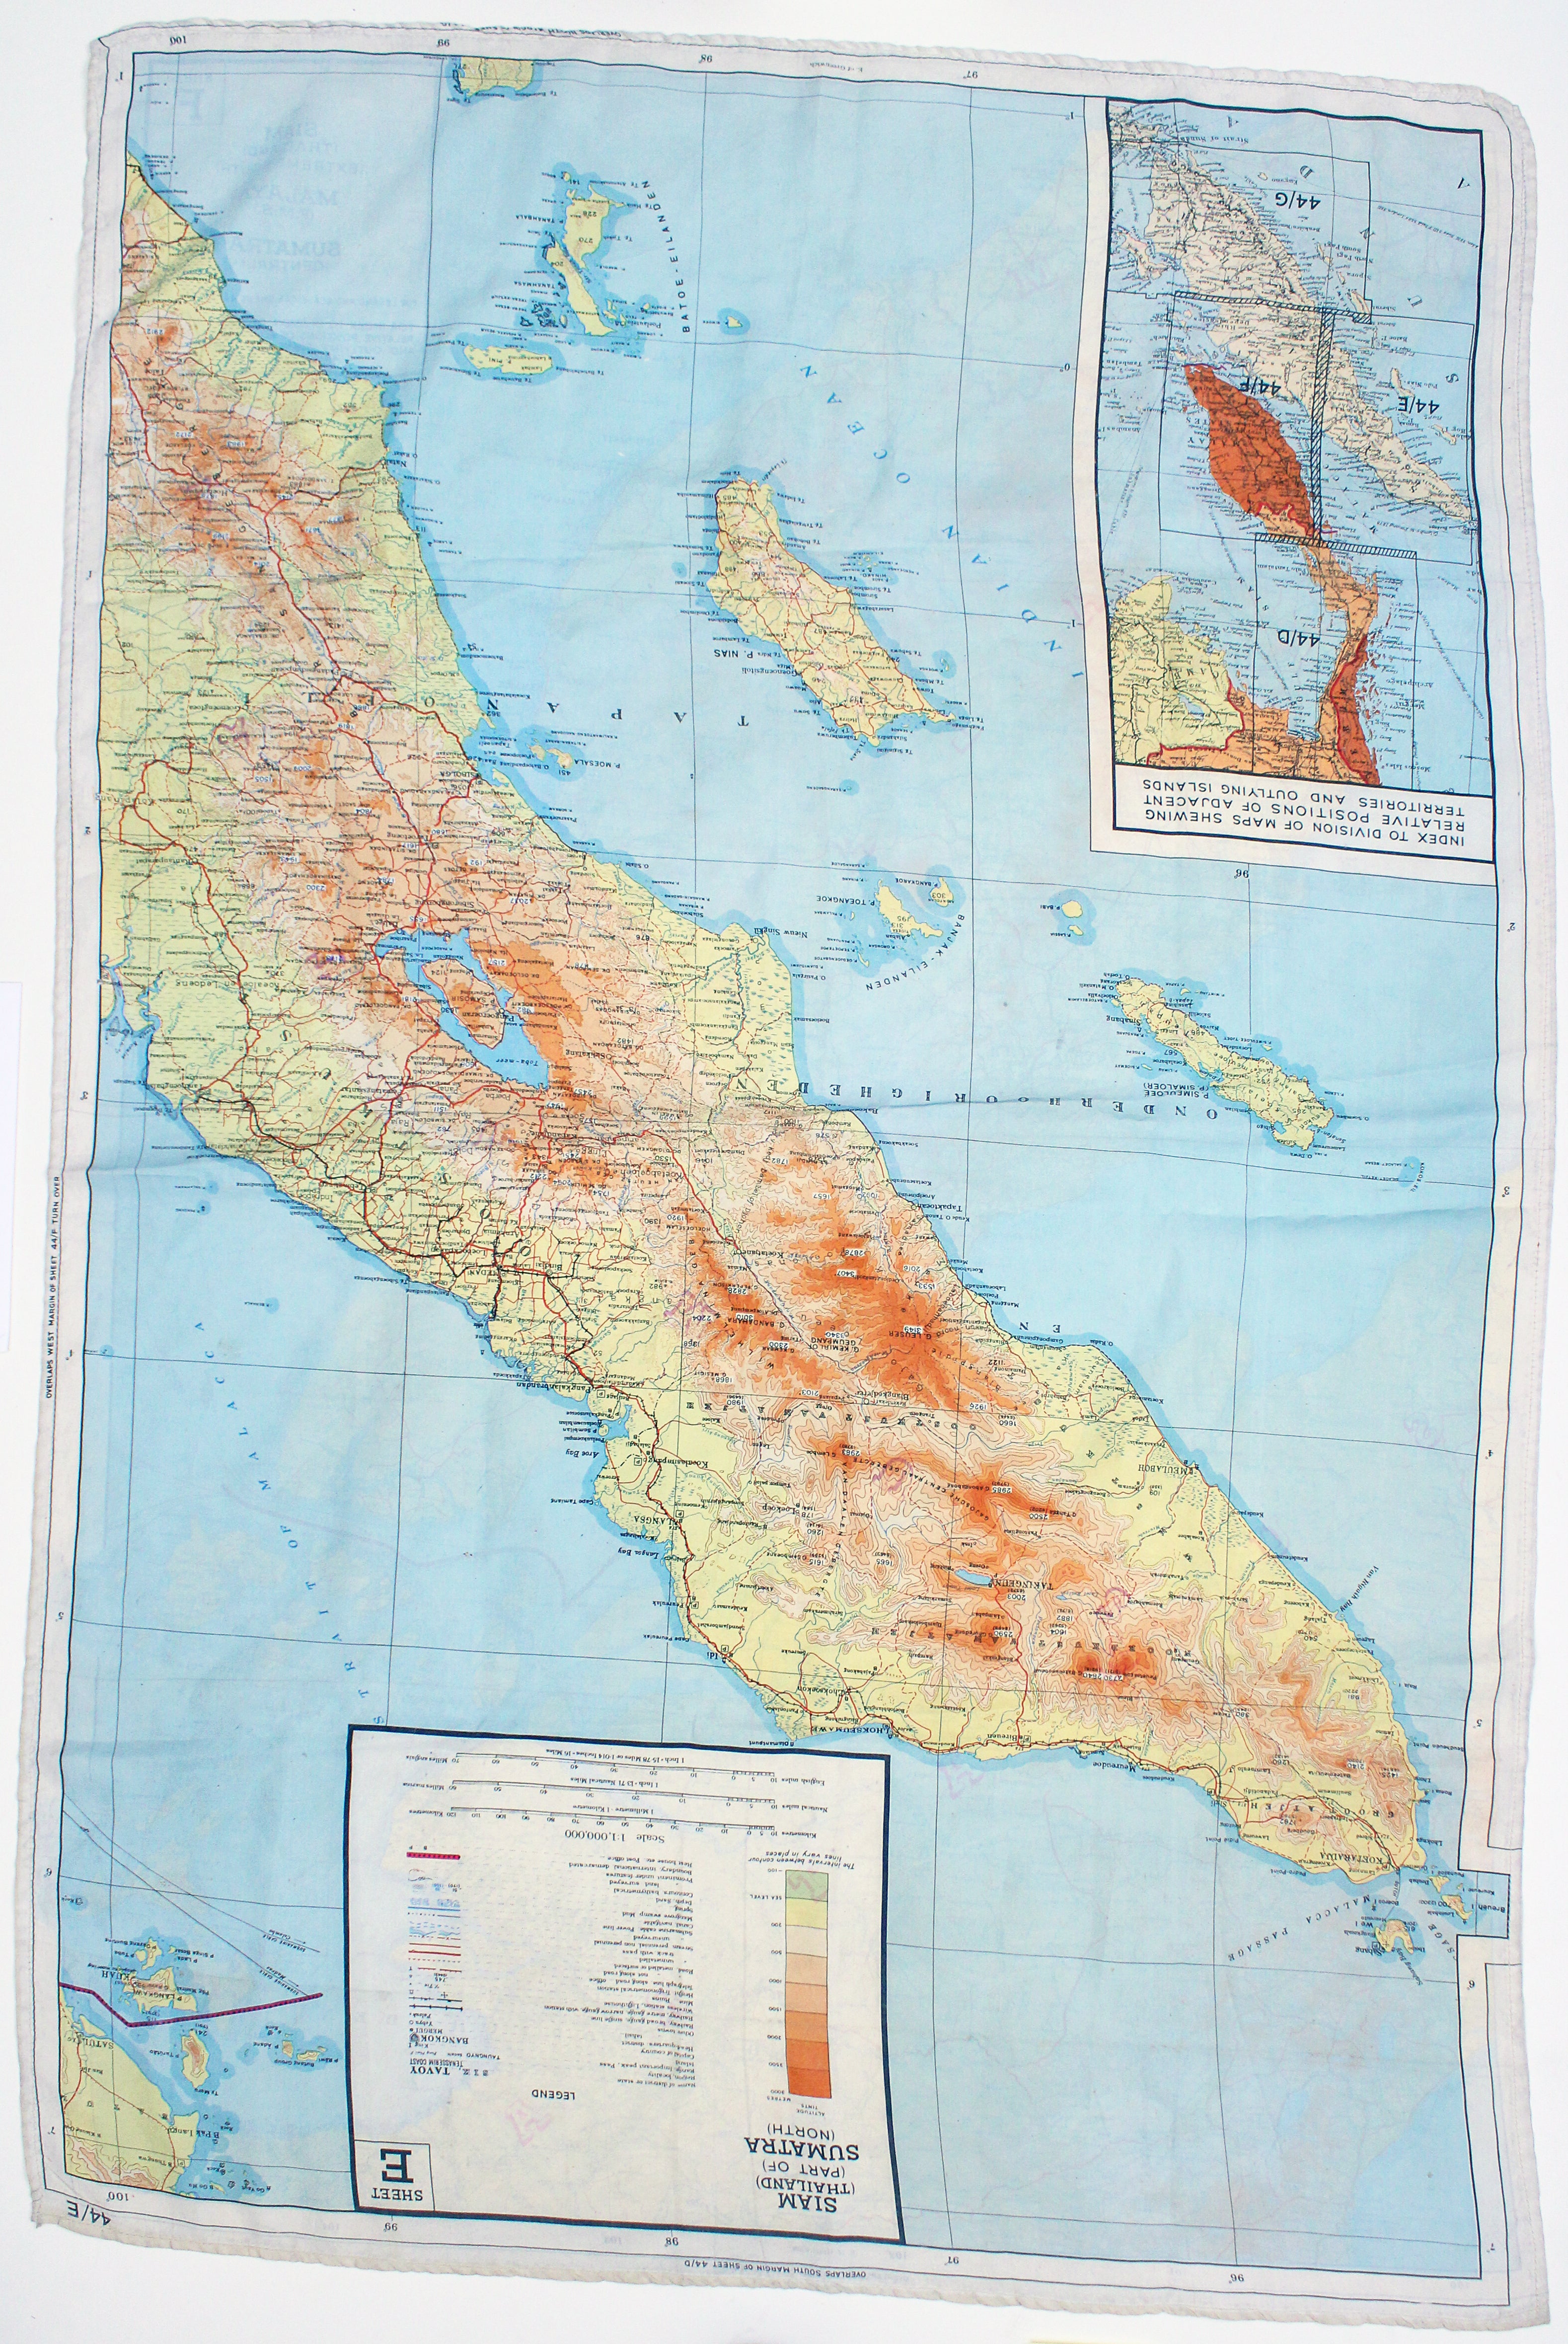 British Escape & Evasion Map of Southeast Asia